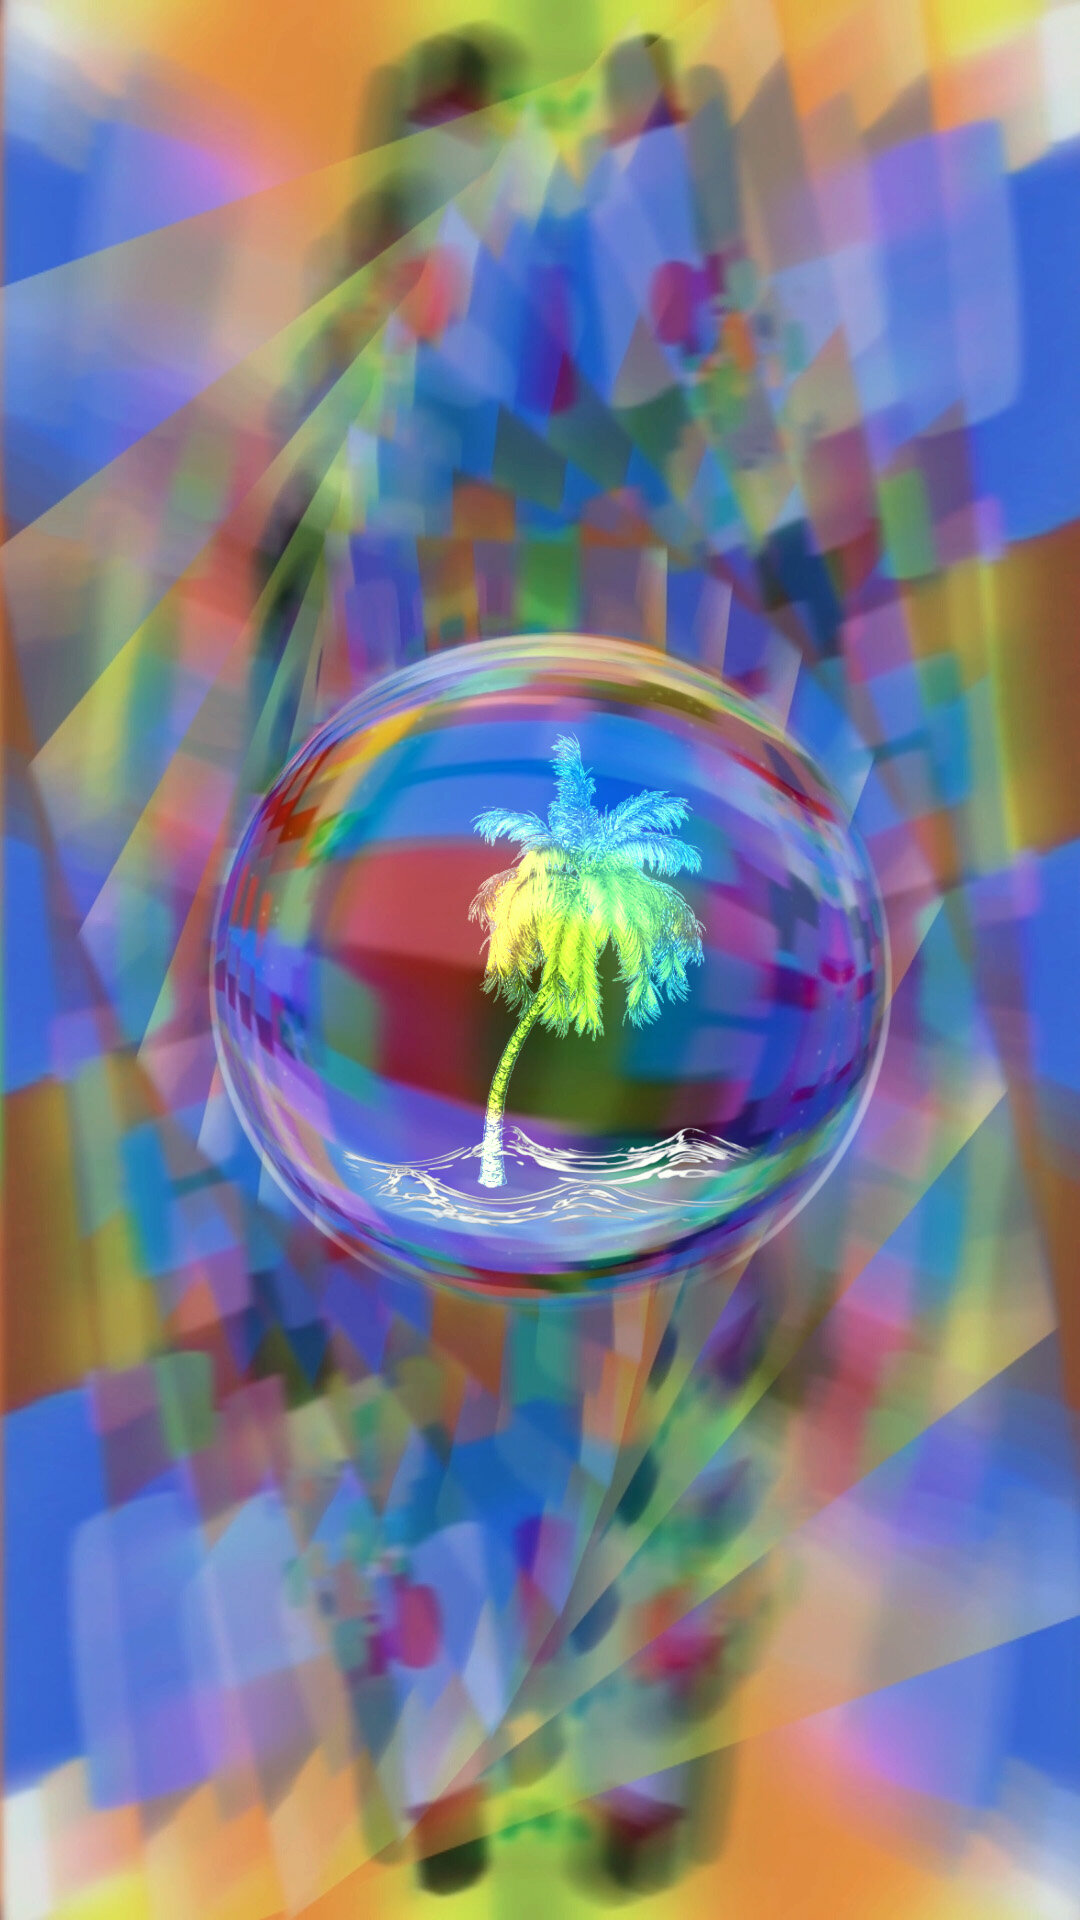 crystal ball video 4 (0-01-22-14) 2.jpg